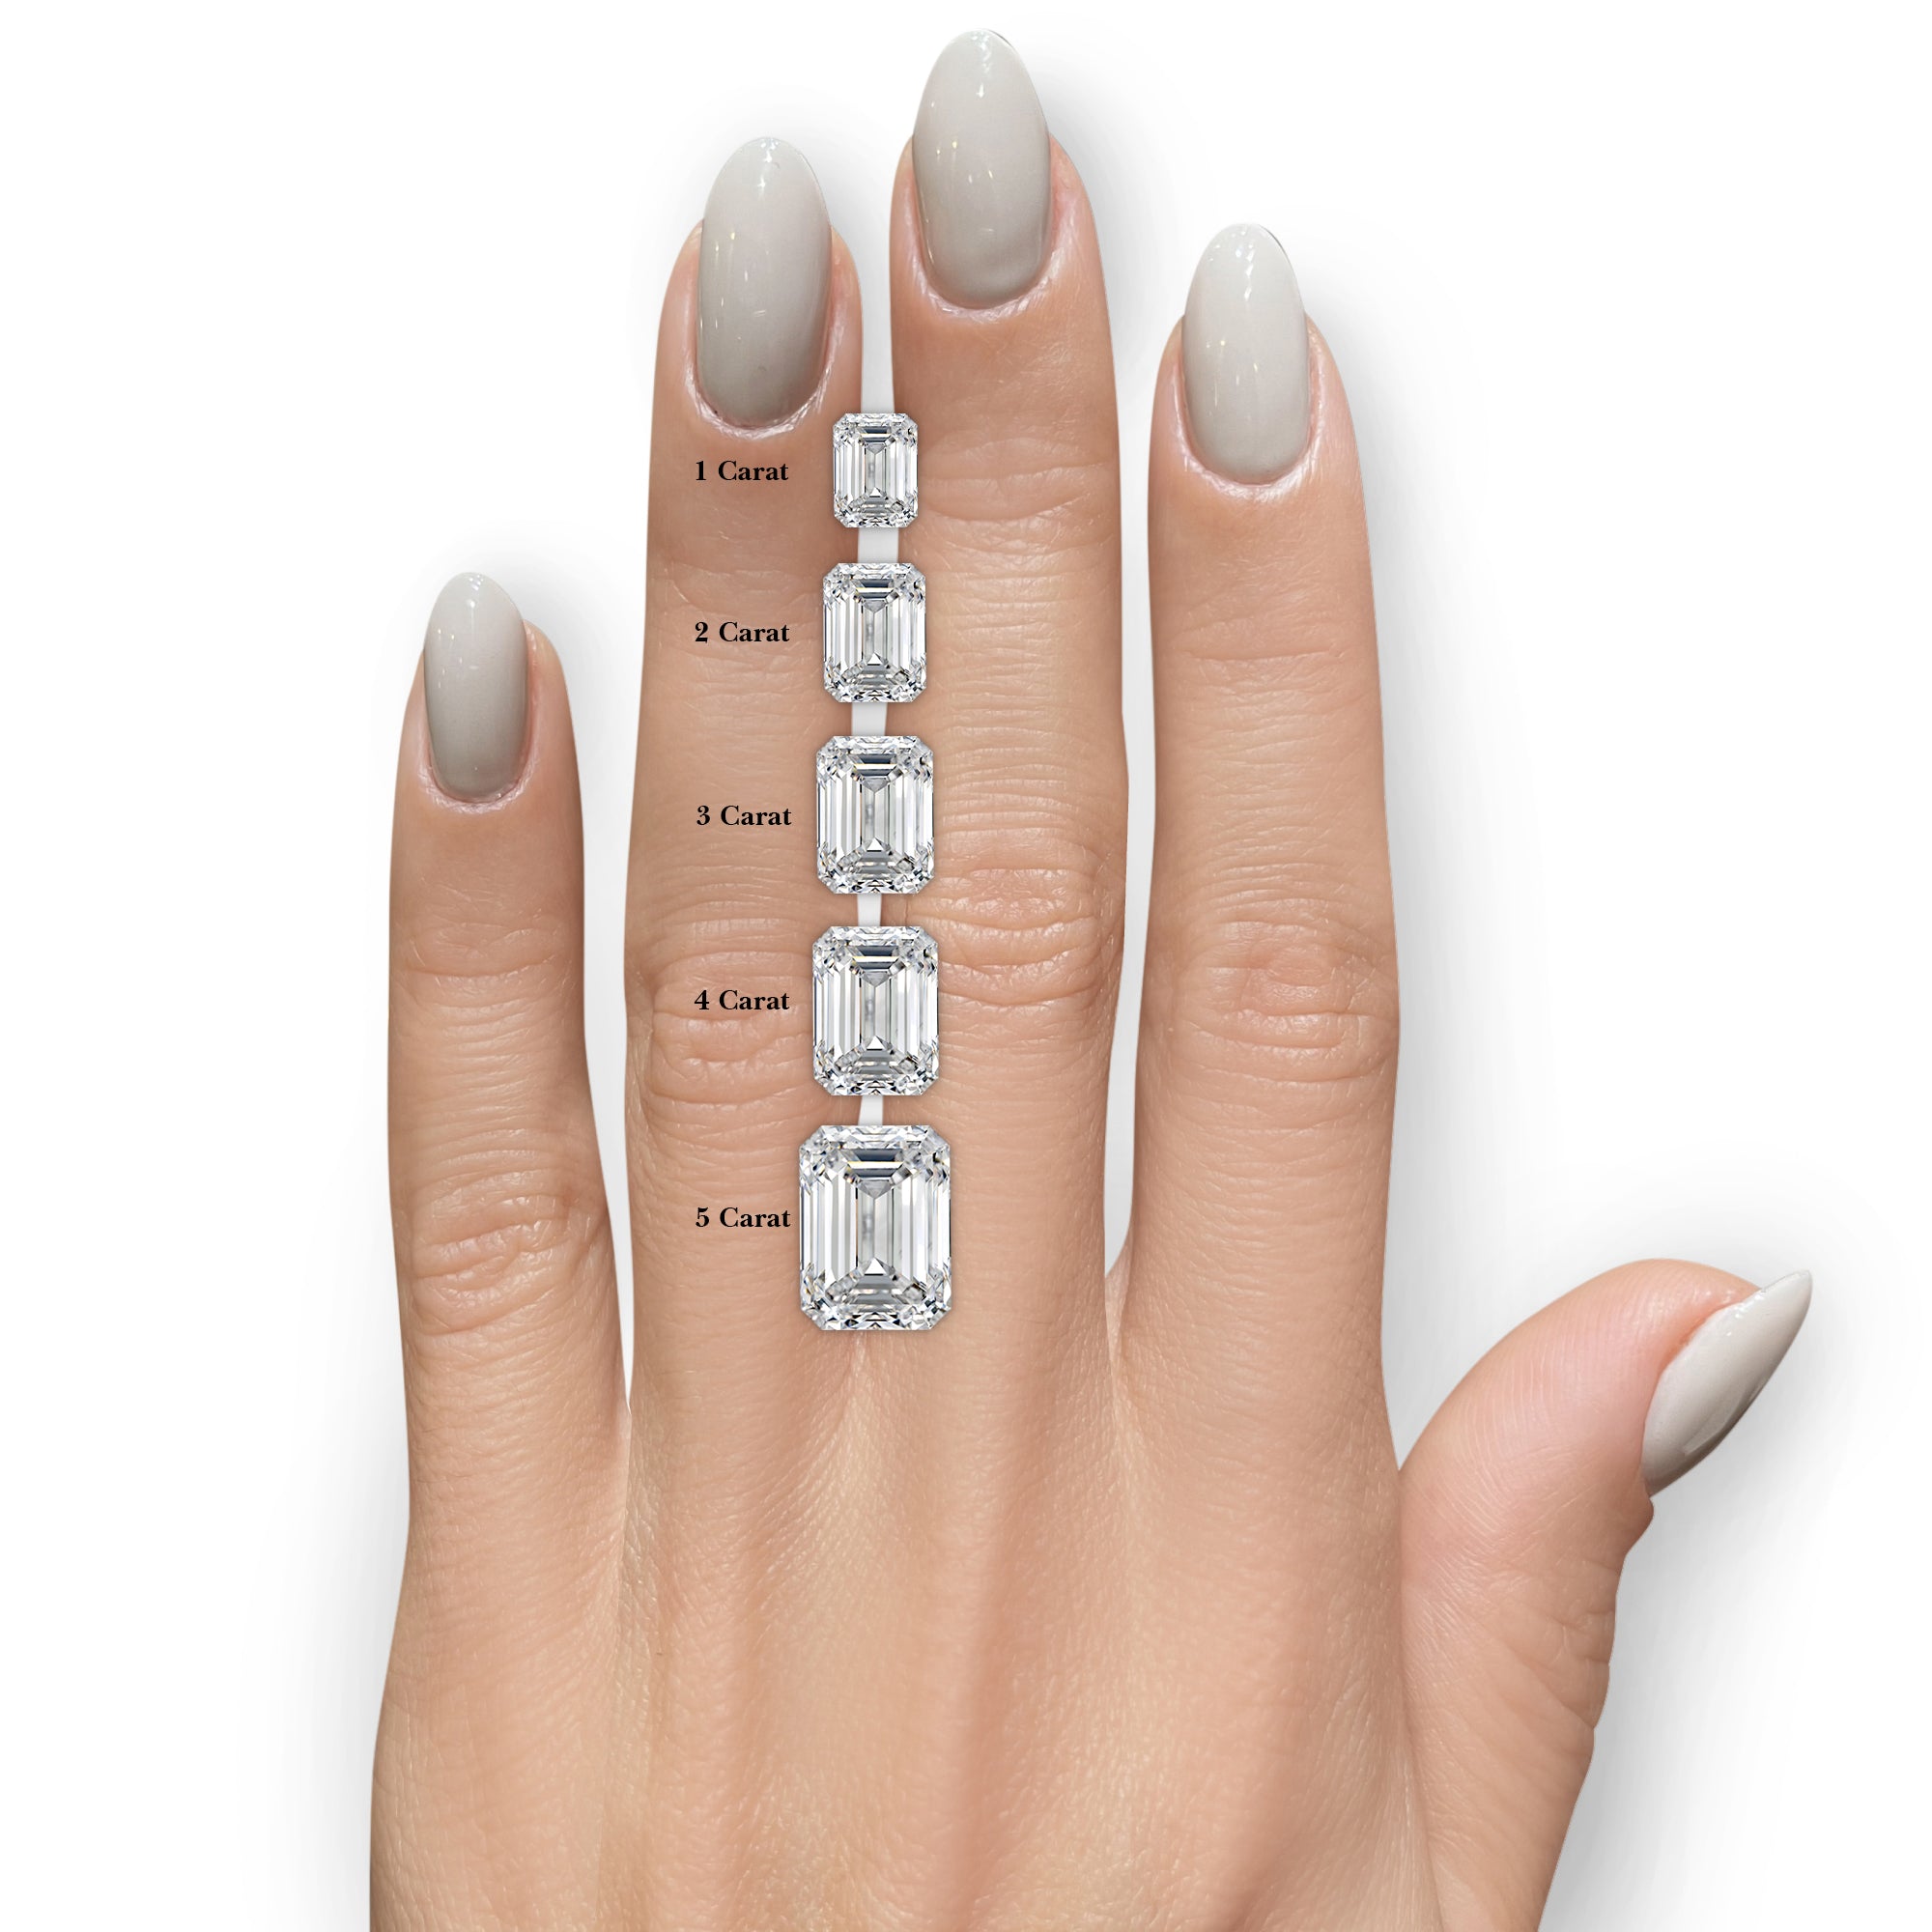 Royal Diamond Engagement Ring -14K White Gold